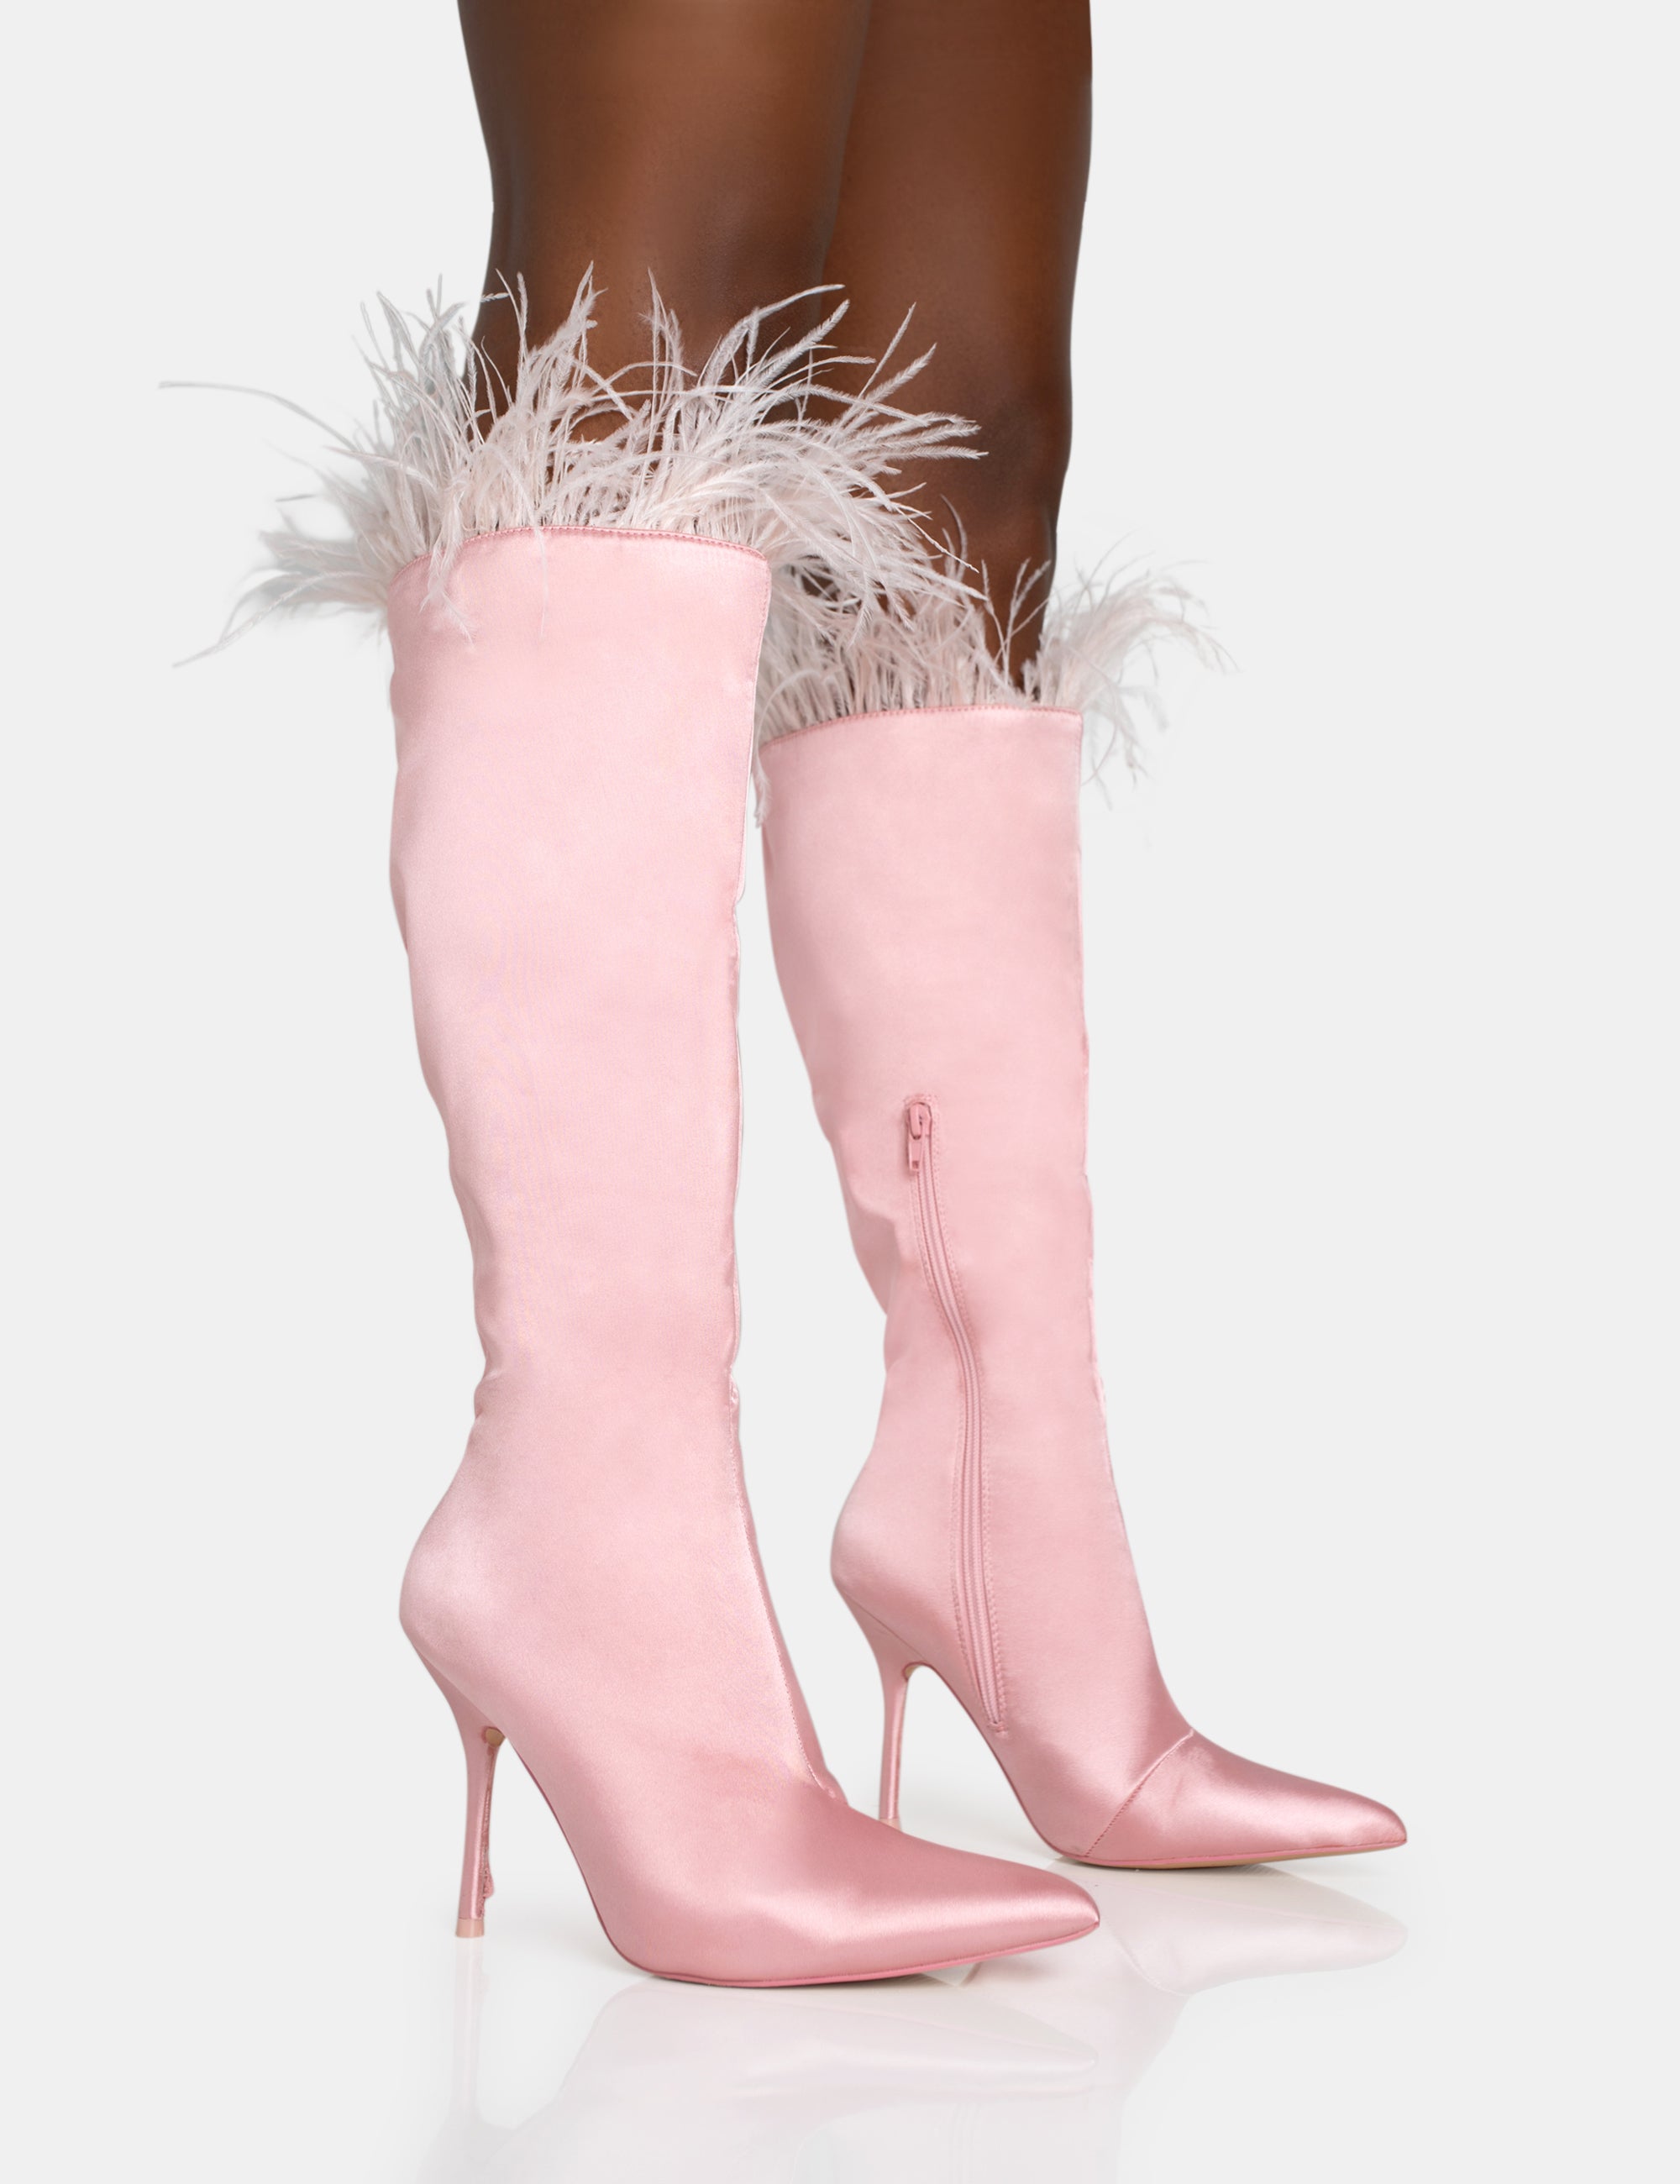 Baddie Baby Pink Satin Feather Pointed Toe Stiletto Knee High